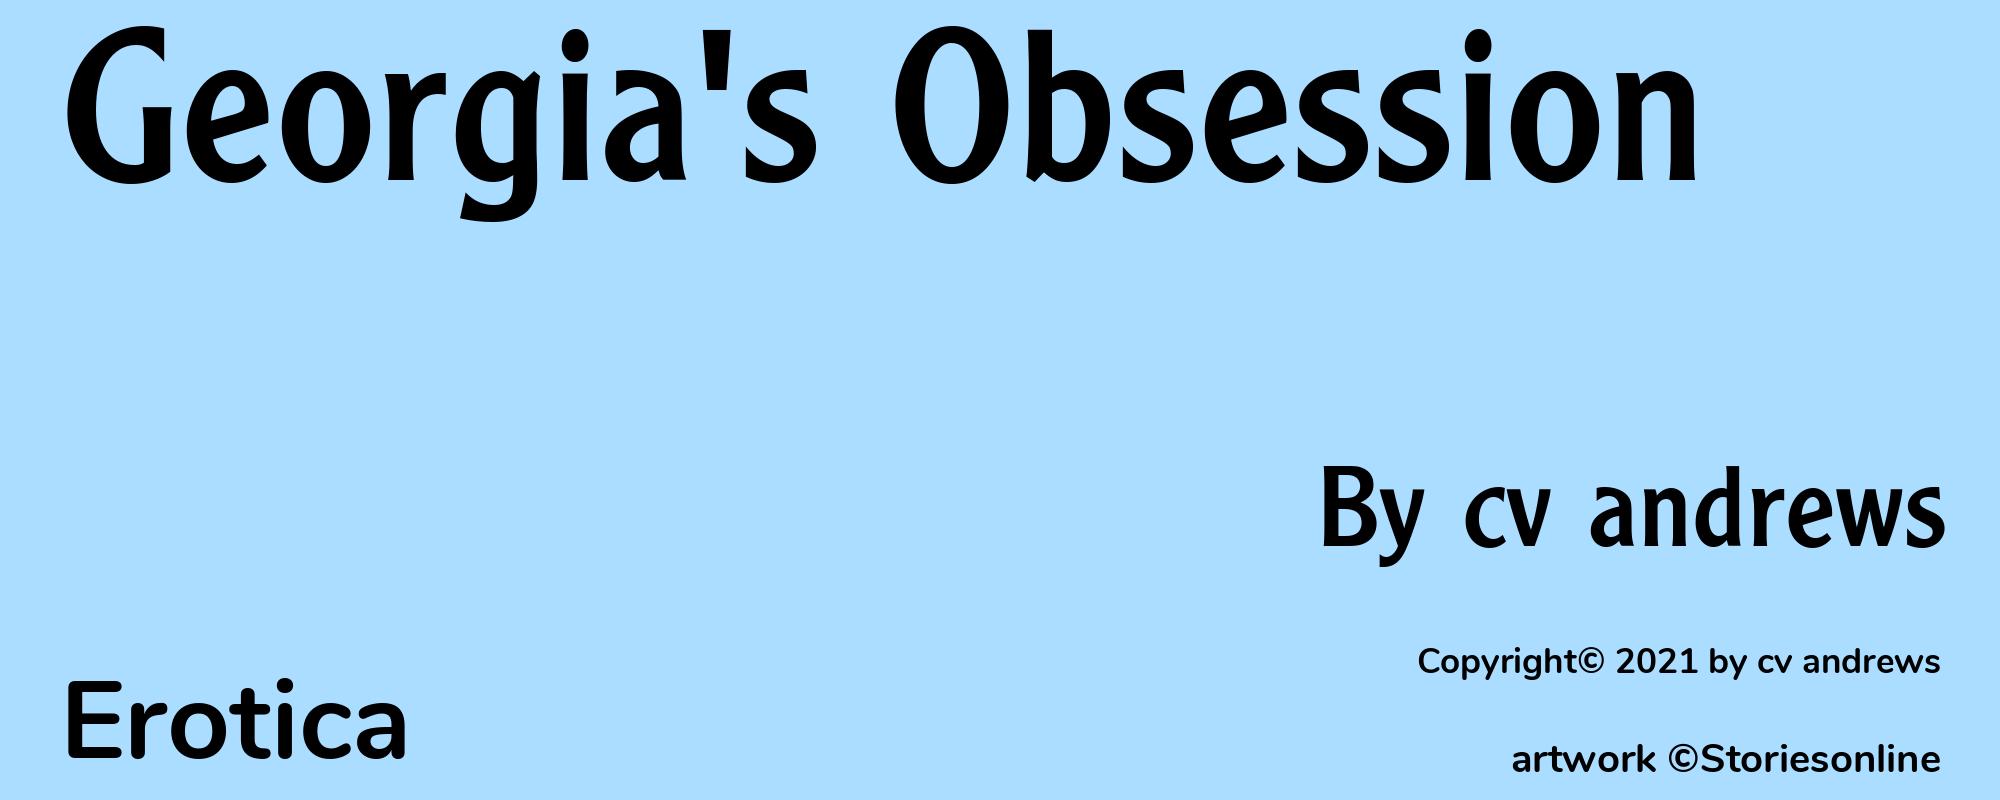 Georgia's Obsession - Cover